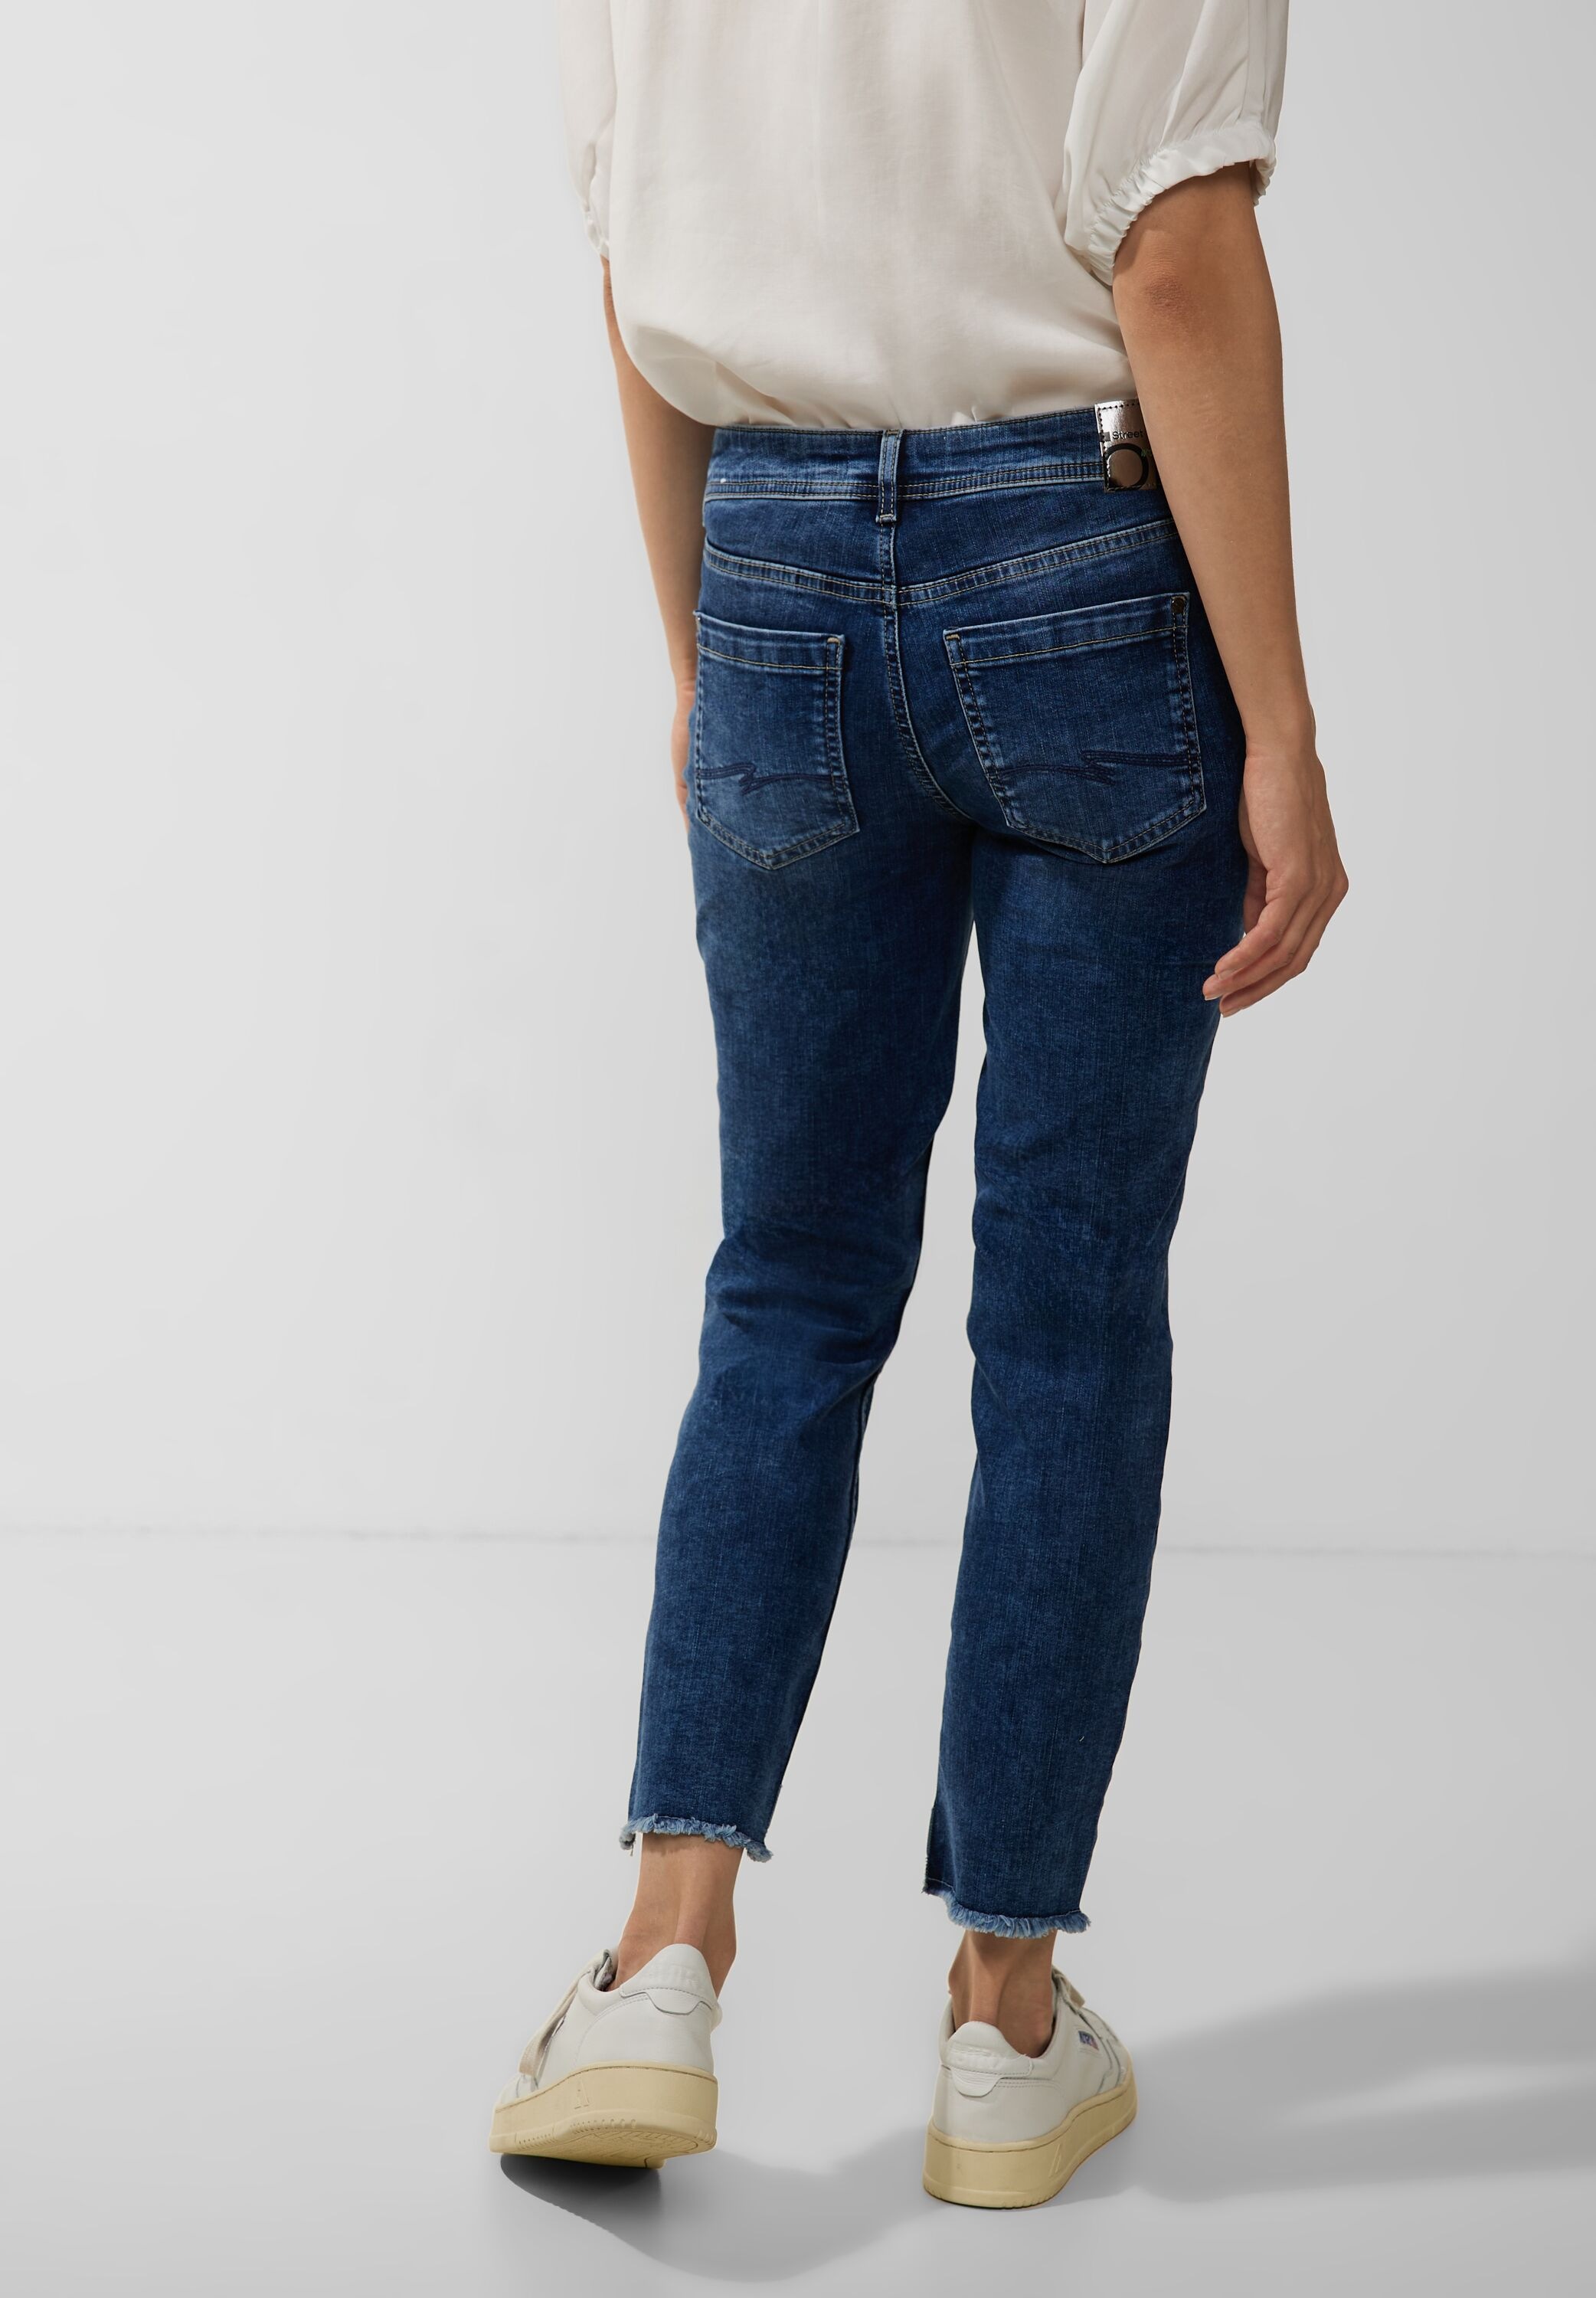 ONE Middle Waist STREET bestellen | BAUR Comfort-fit-Jeans,